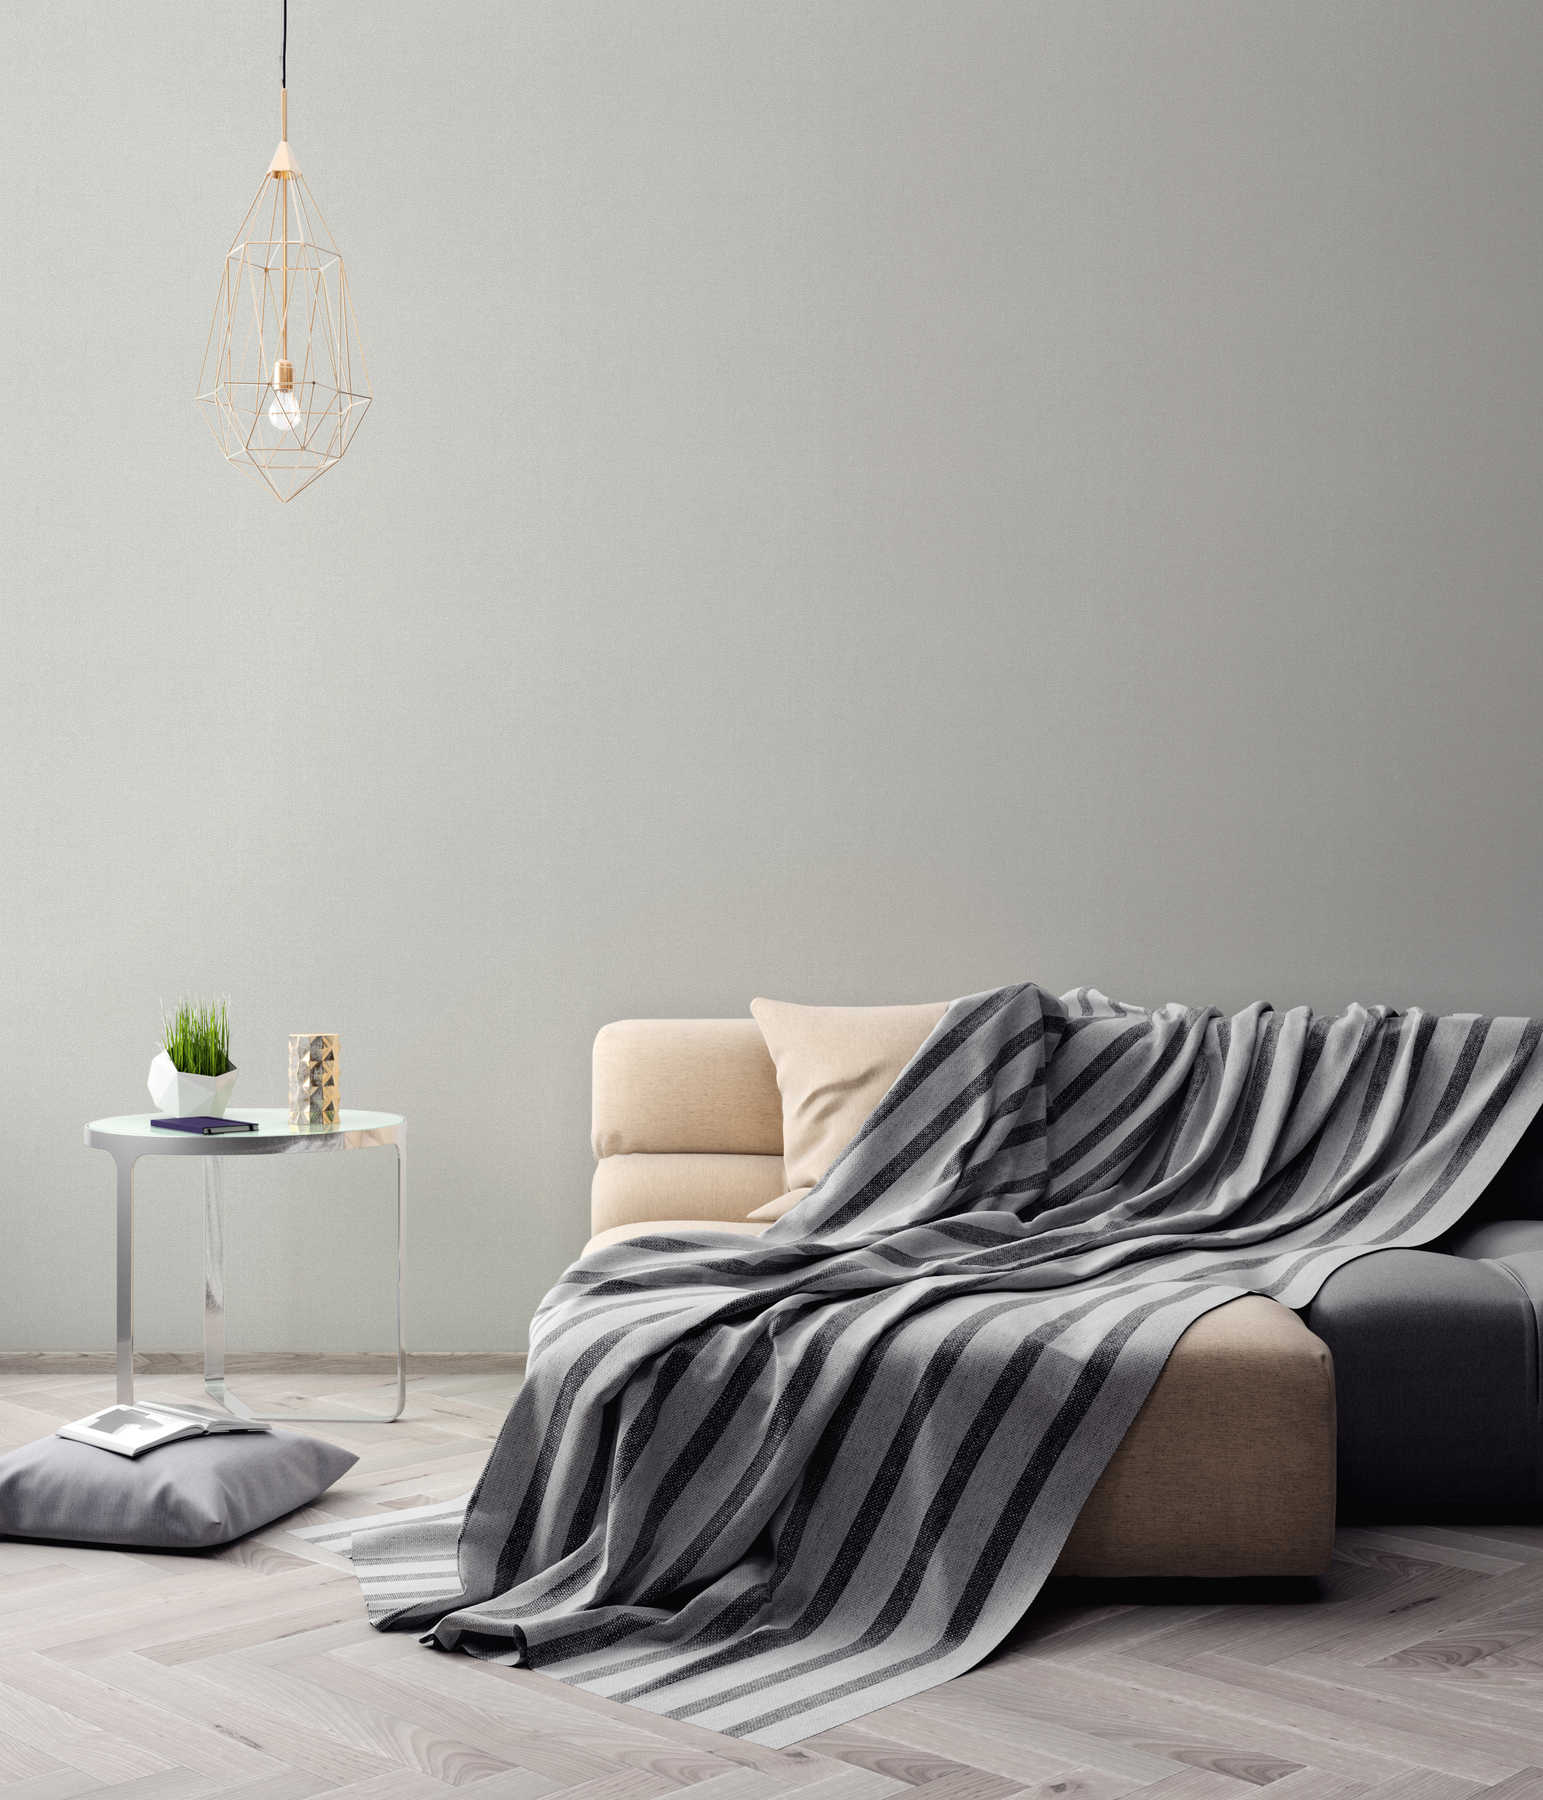             Non-woven wallpaper plain with fibre textured pattern - grey, silver
        